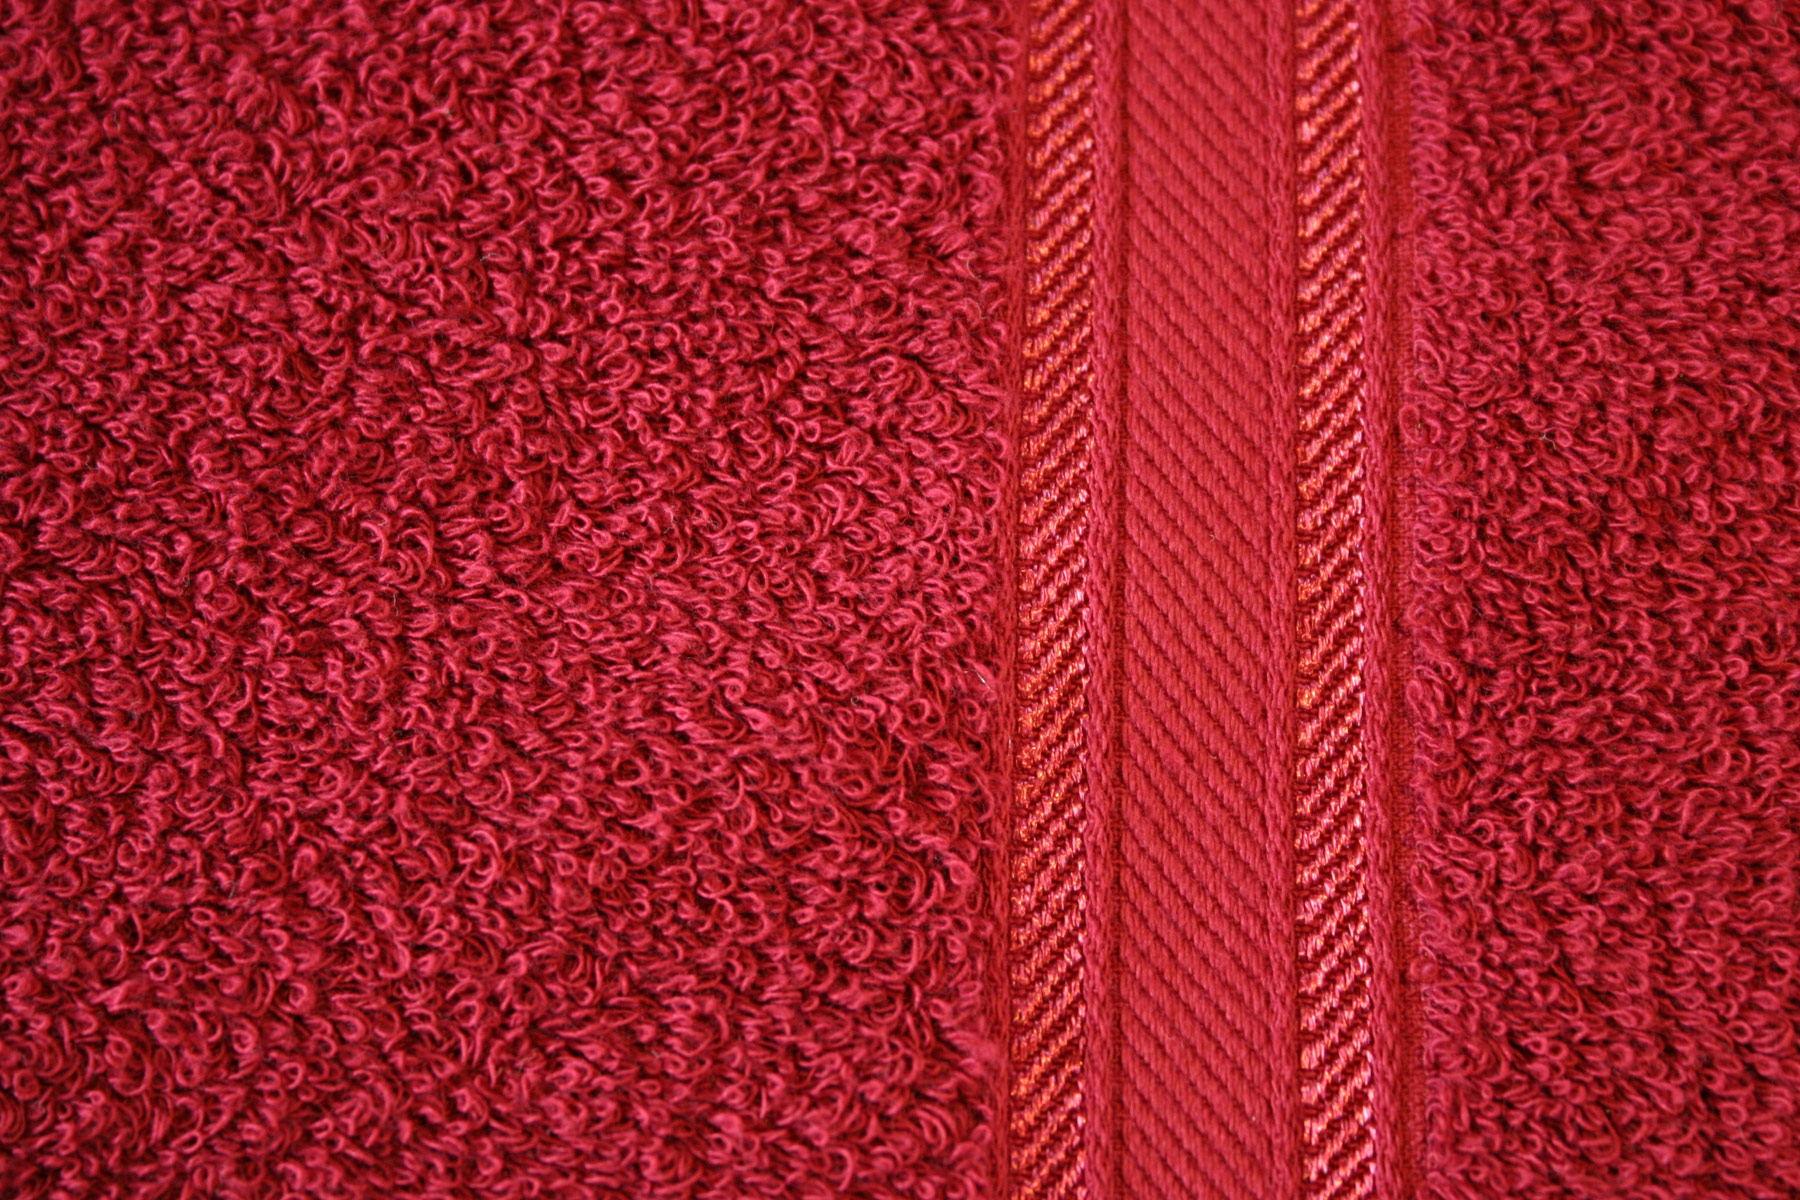 Red fabric photo